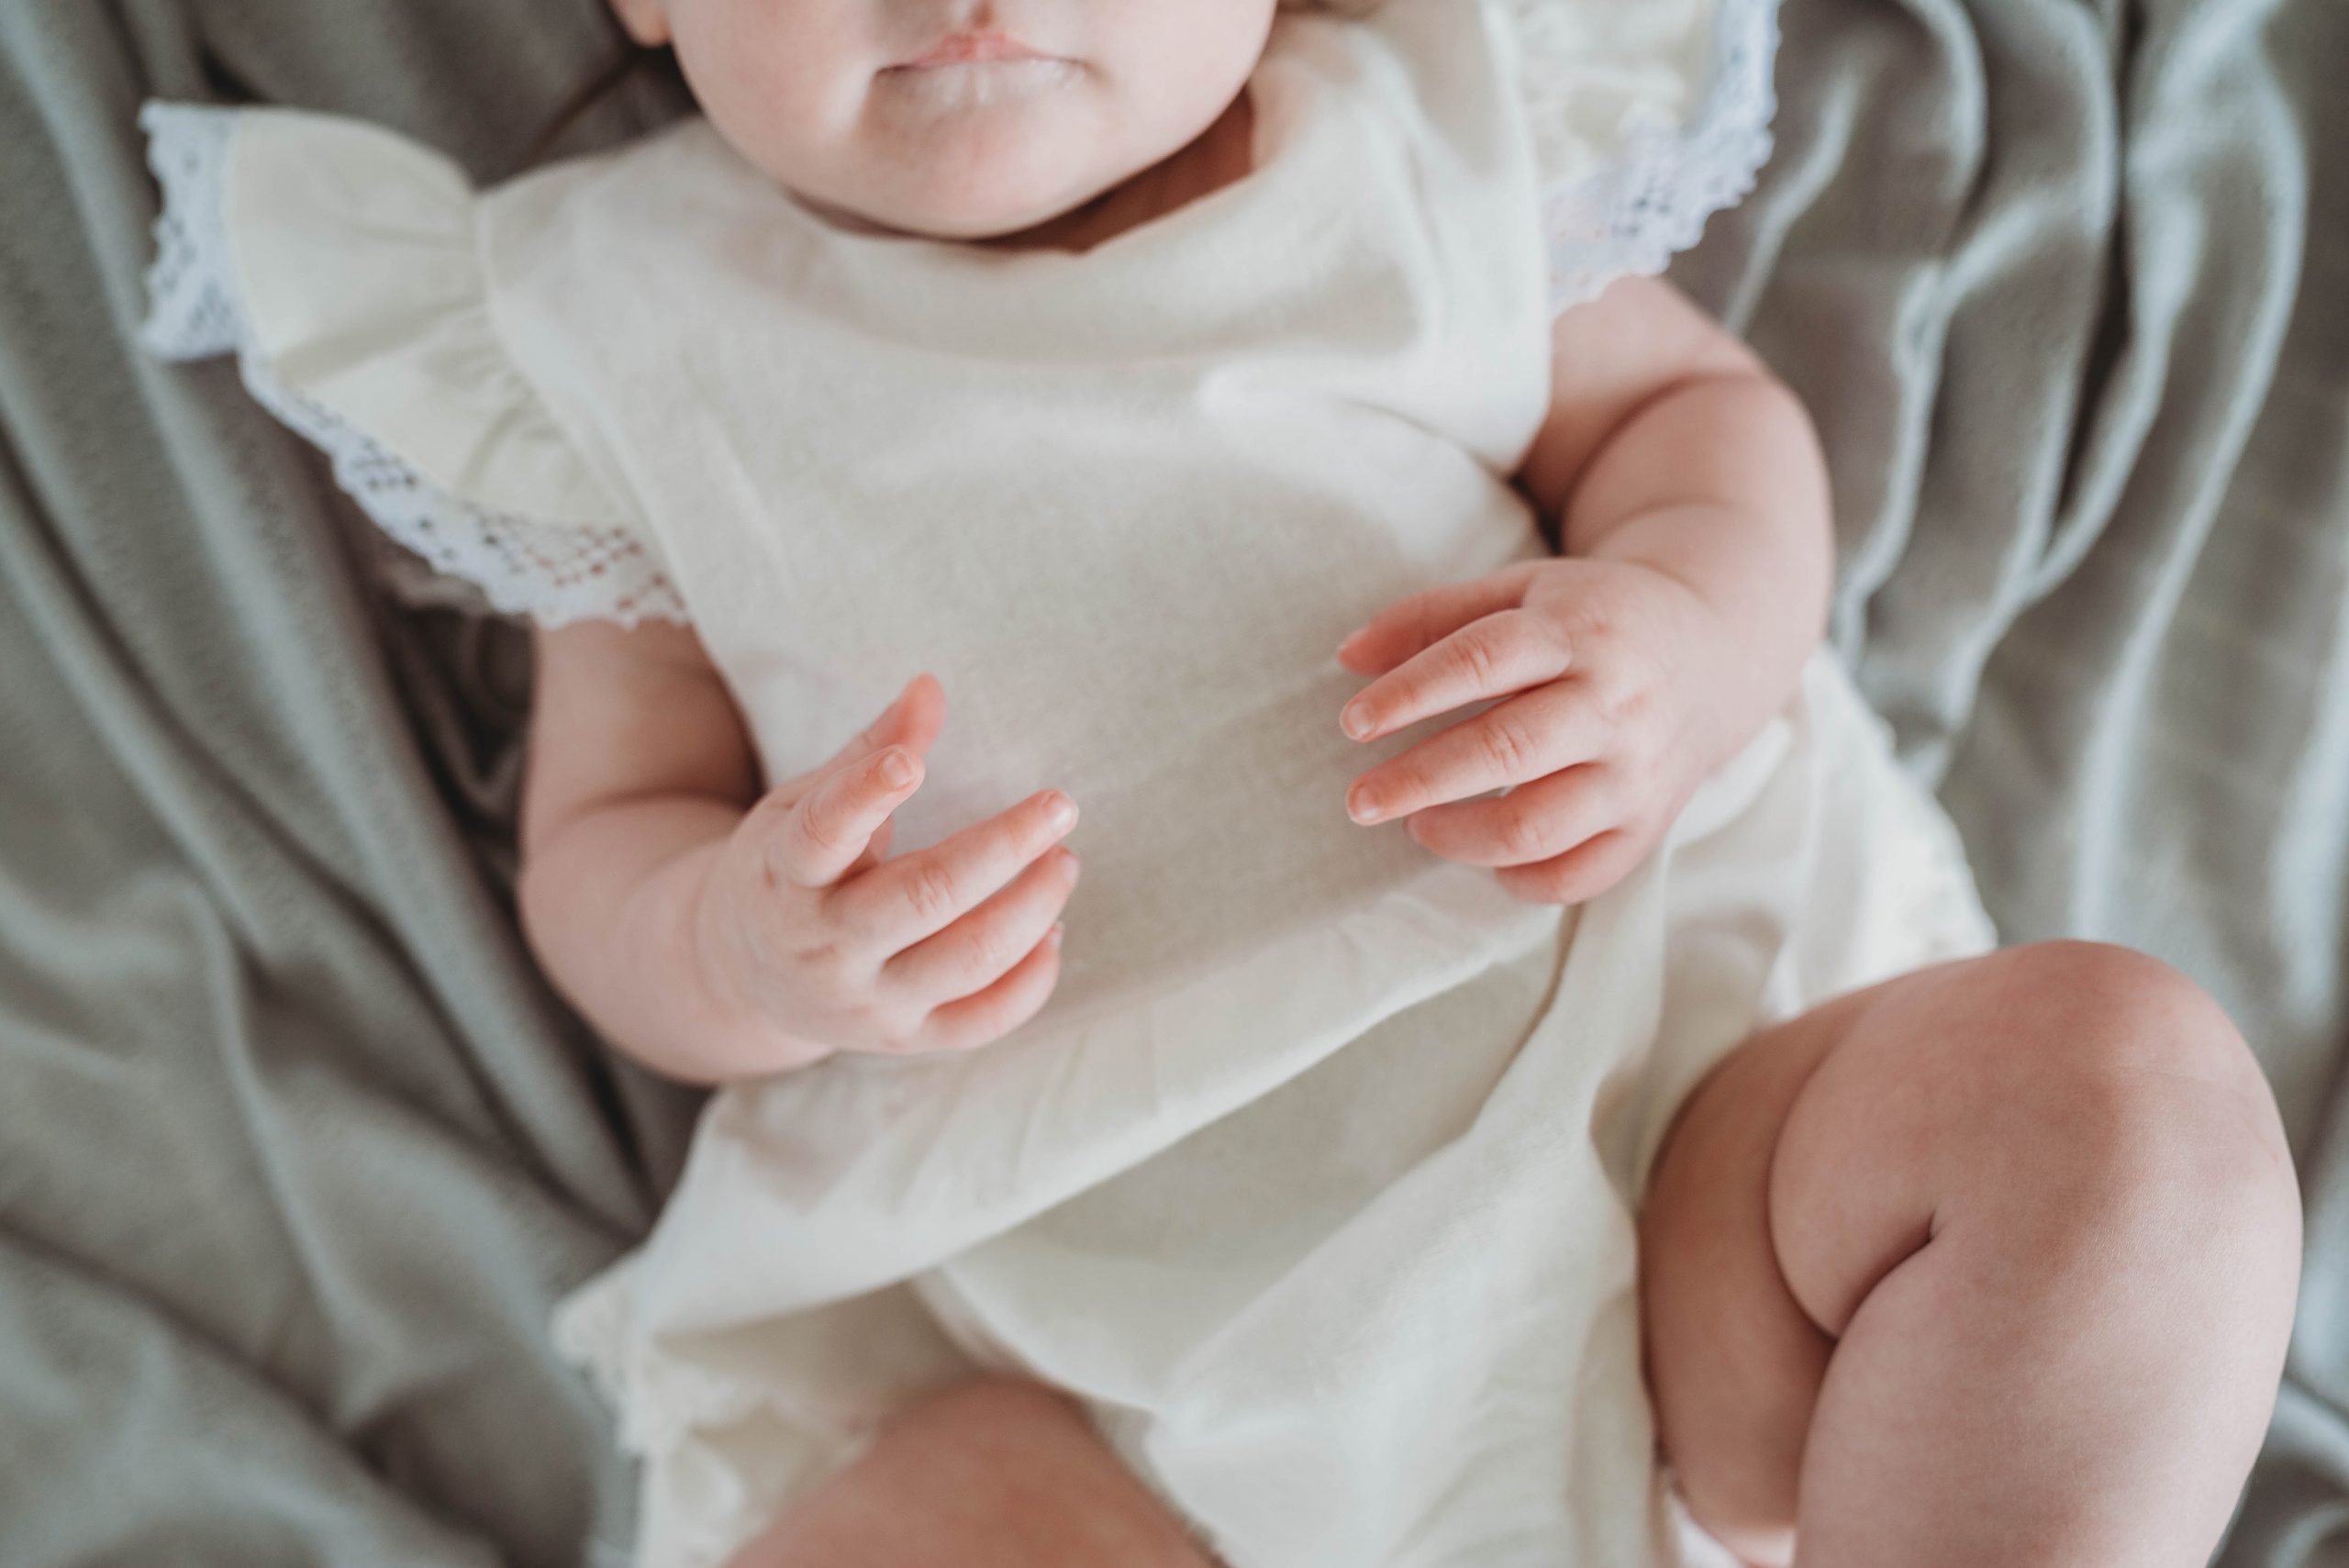 Chloe Jane is 6 Months Old! | Babies - Jennifer Duke Photography